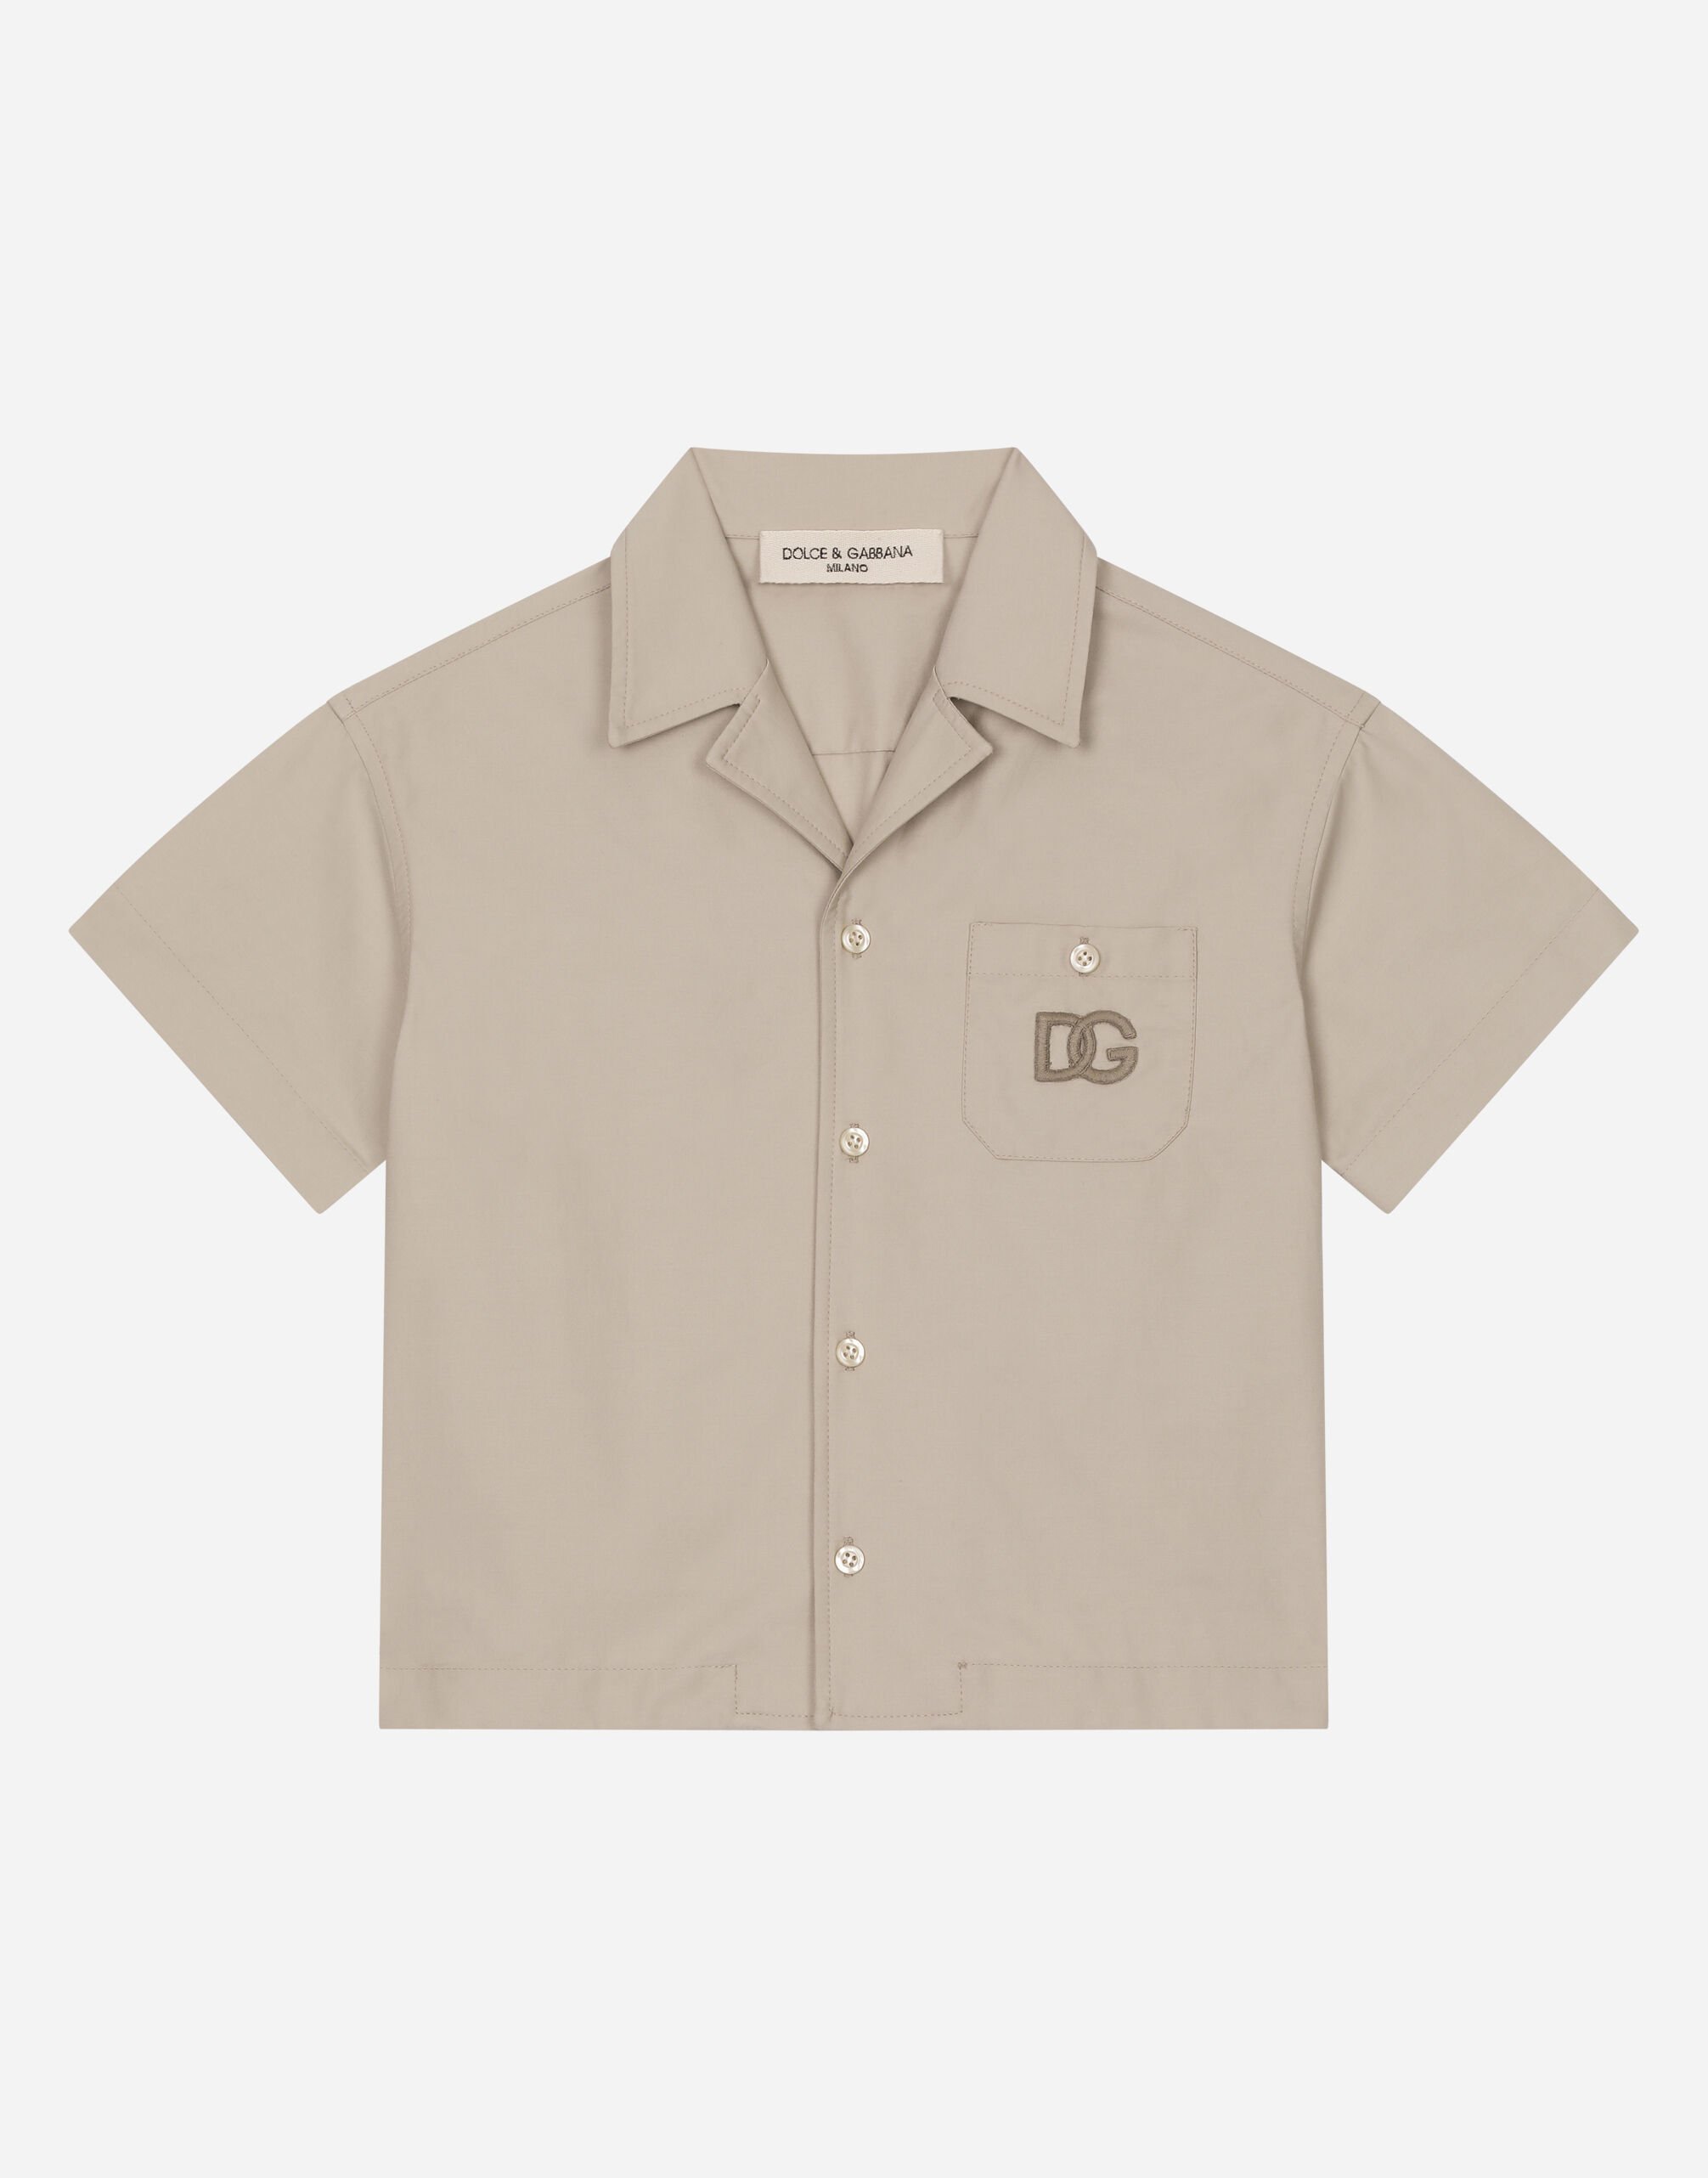 Dolce & Gabbana Drill shirt with DG logo patch Beige L43S74G7NWW